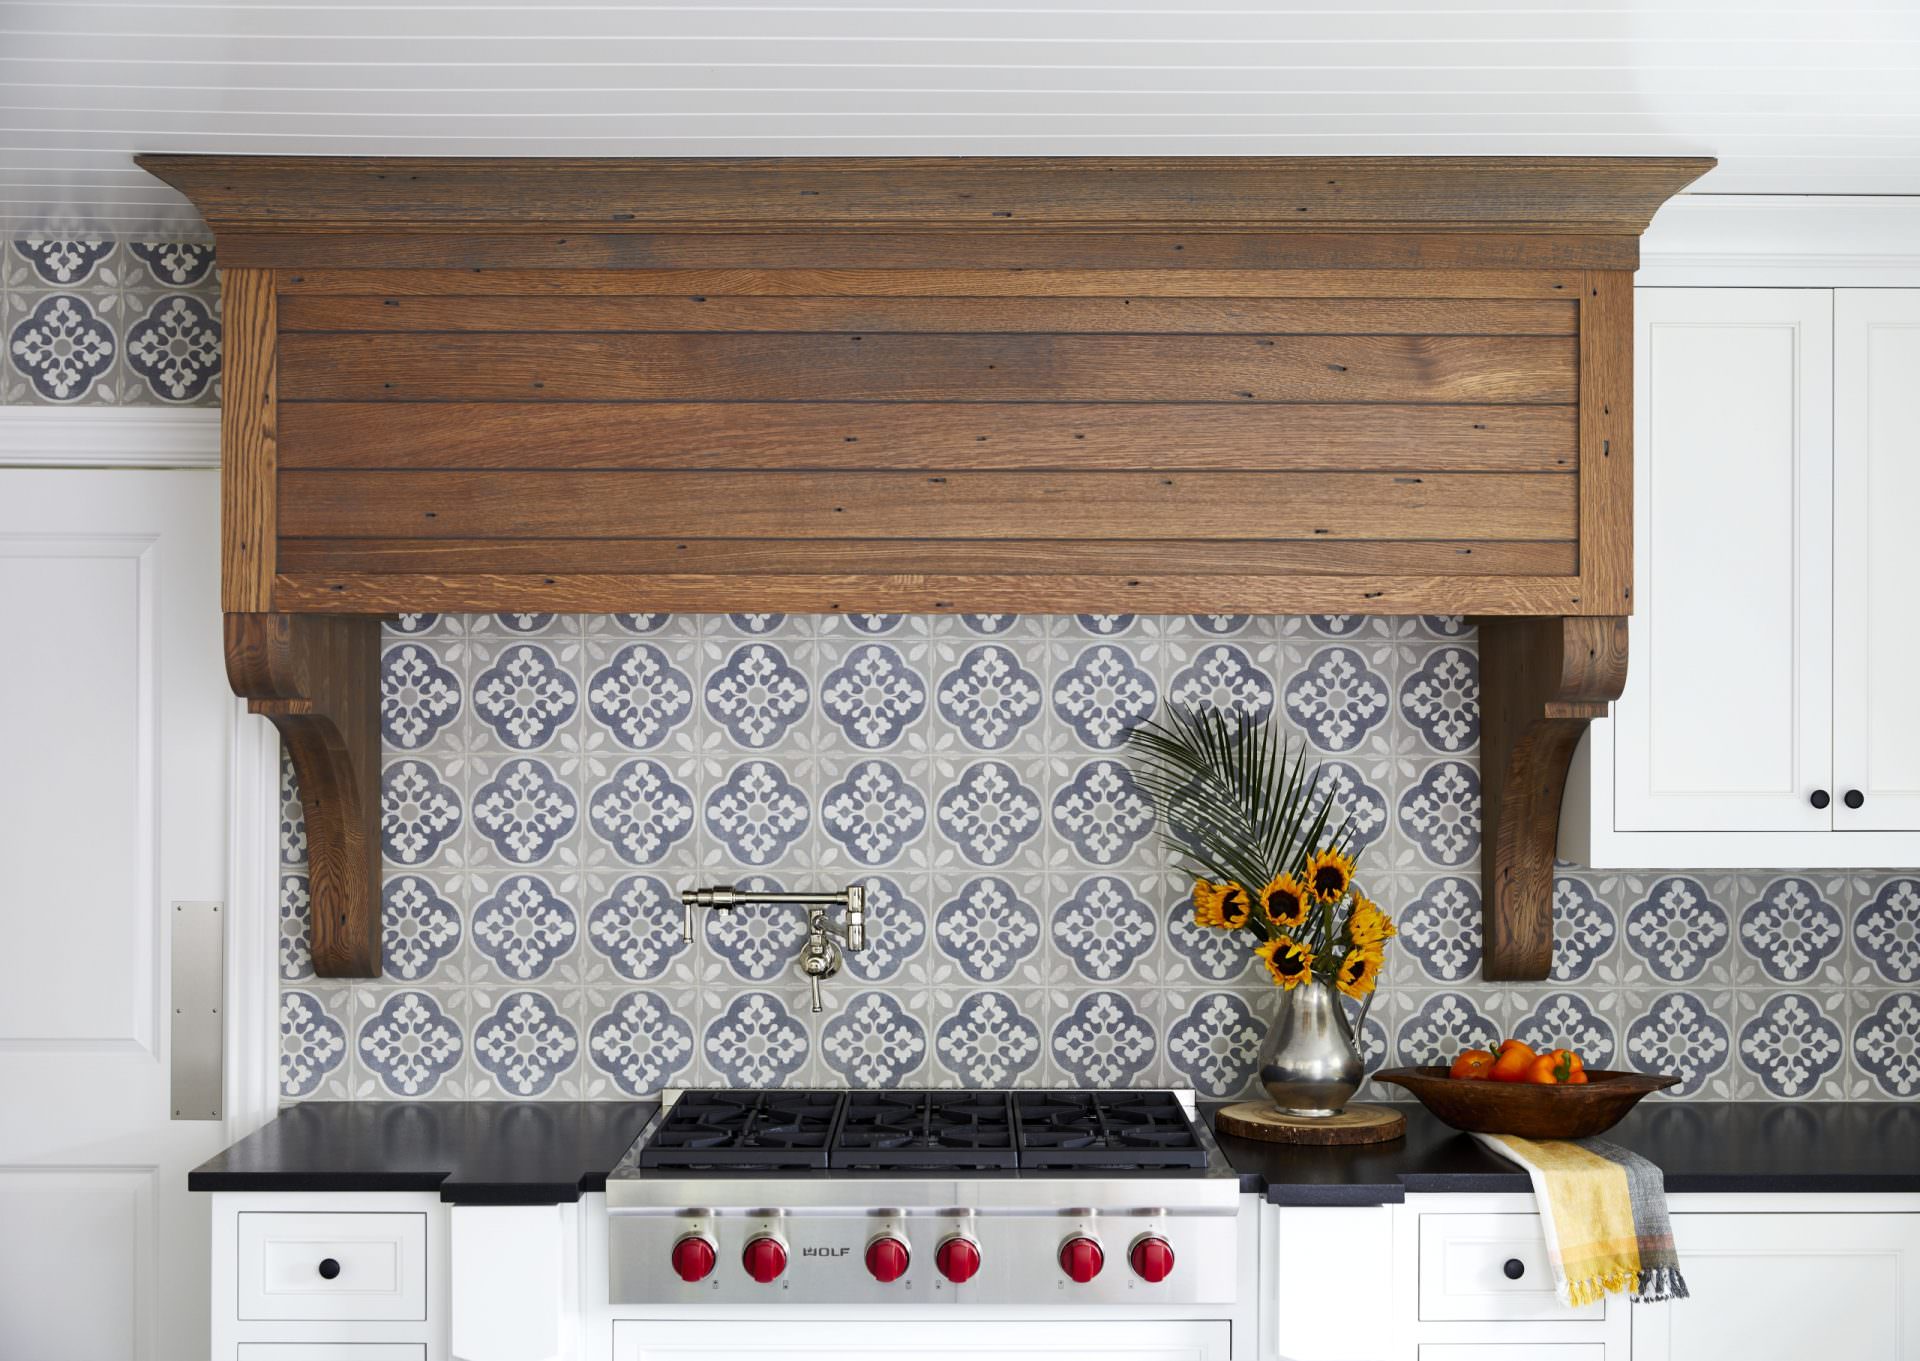 custom range wood hood from quarter sawn white oak and surrounded by white kitchen cabinets and tile backsplash